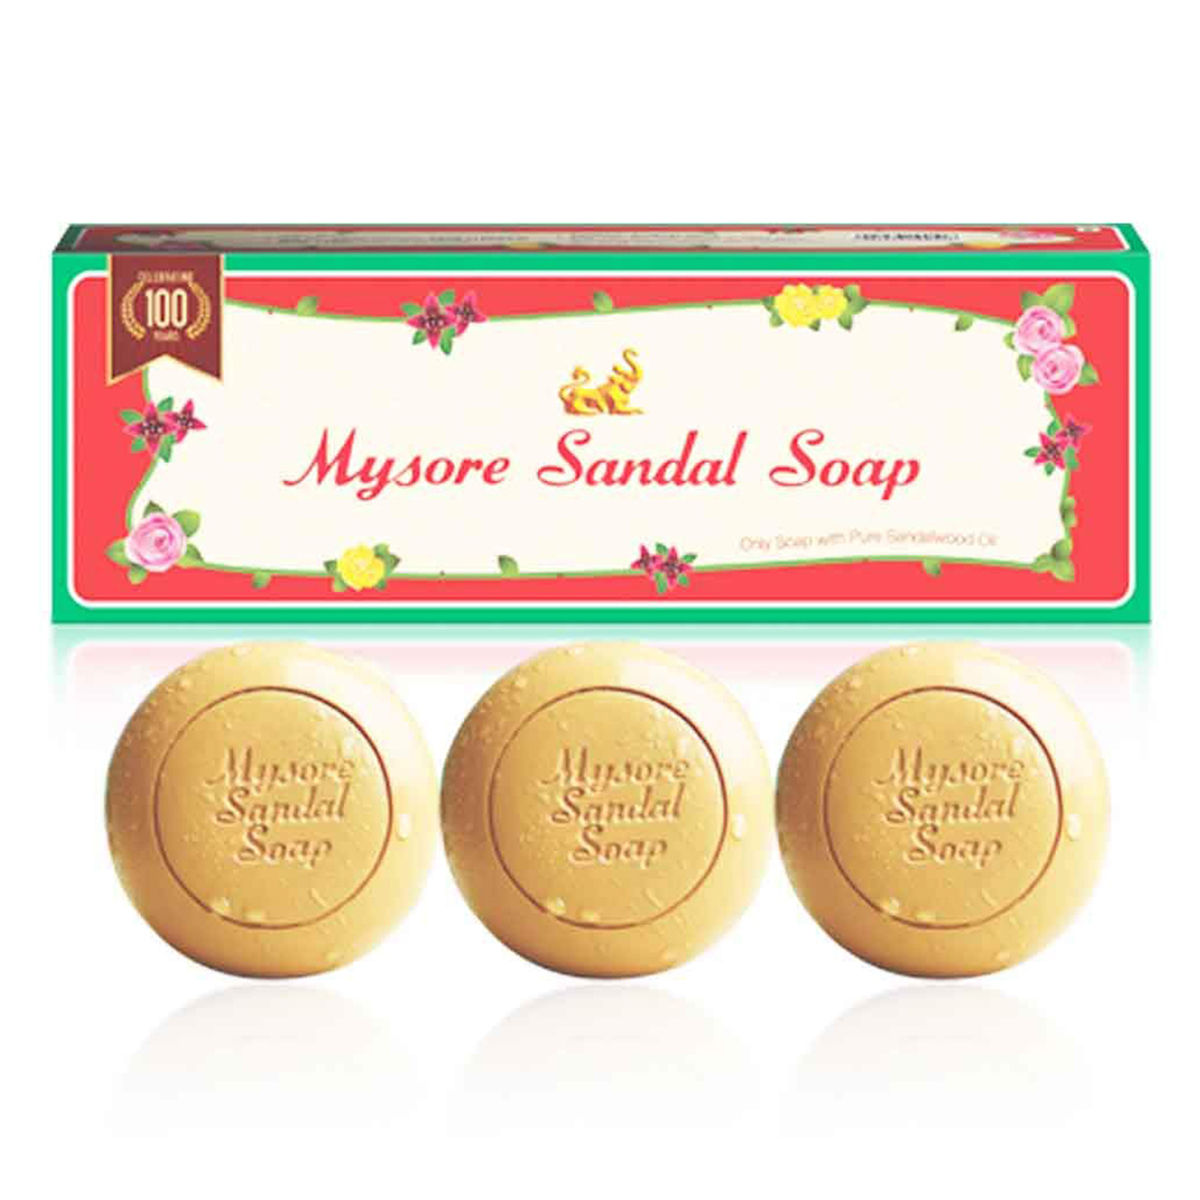 Mysore Sandalwood Soap  Soaps  Body Scrubs  Health  Beauty   iShopIndiancom